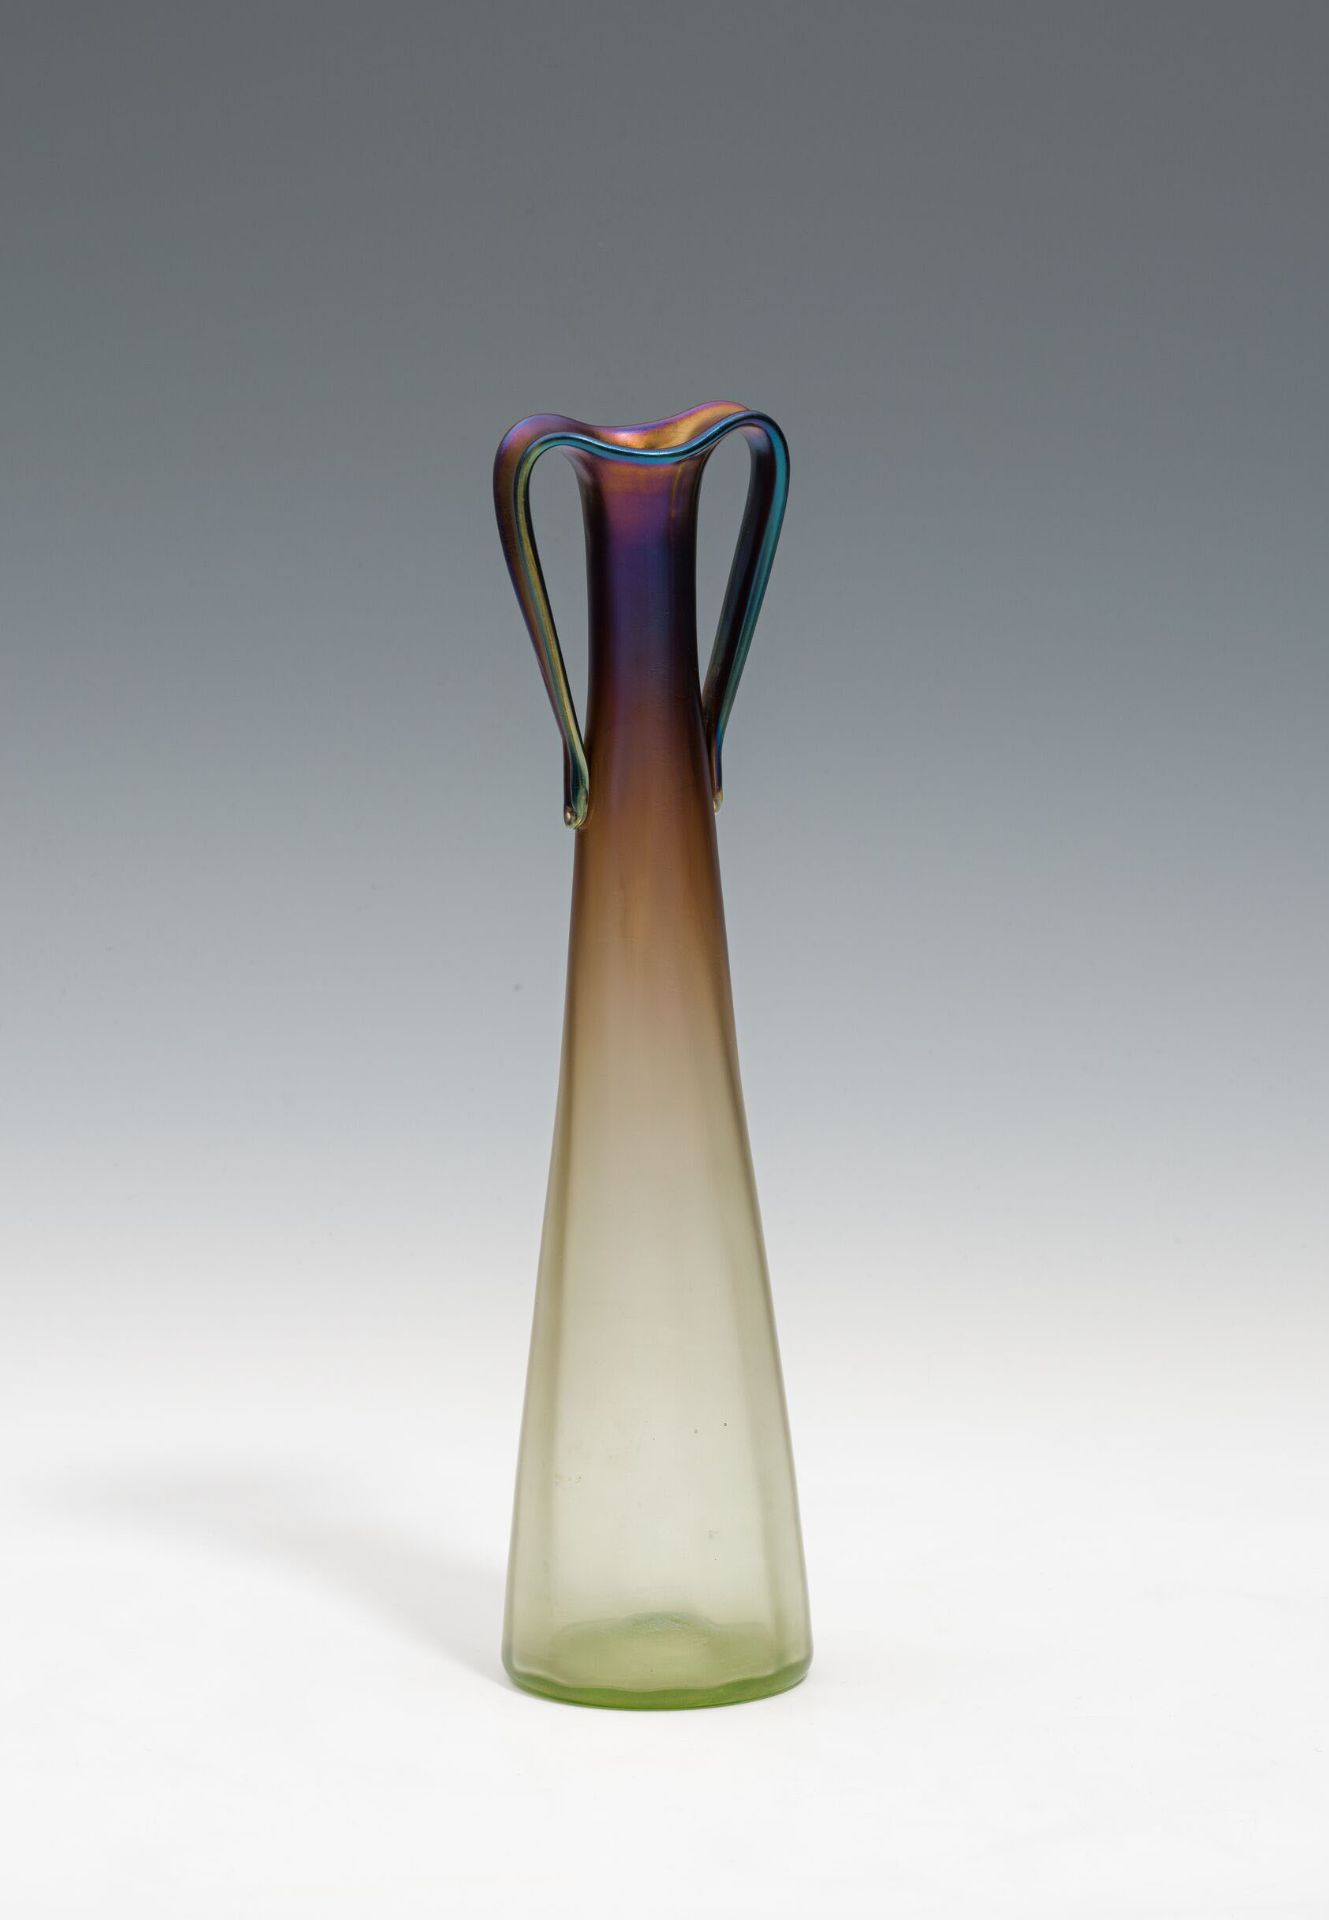 Jutta Sika and Johann Lötz WitweVaseKlostermühle, 1902greenish glass, overlaid in violet; 2 handles;